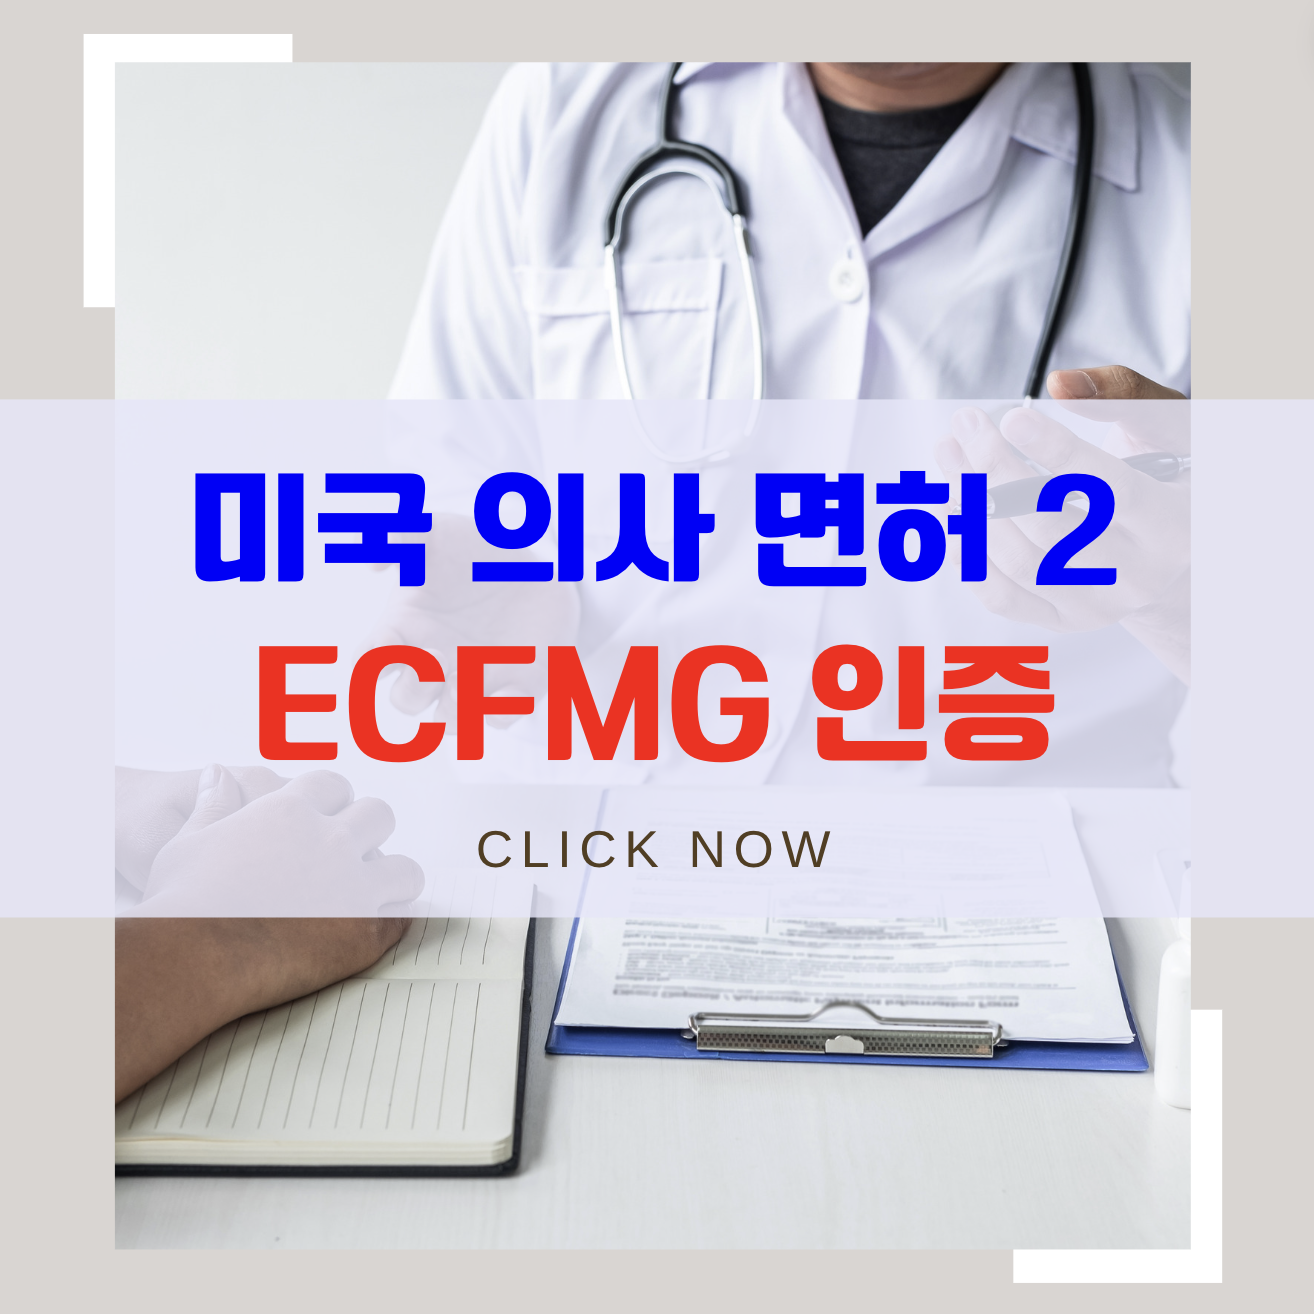 ECFMG 인증 받는방법